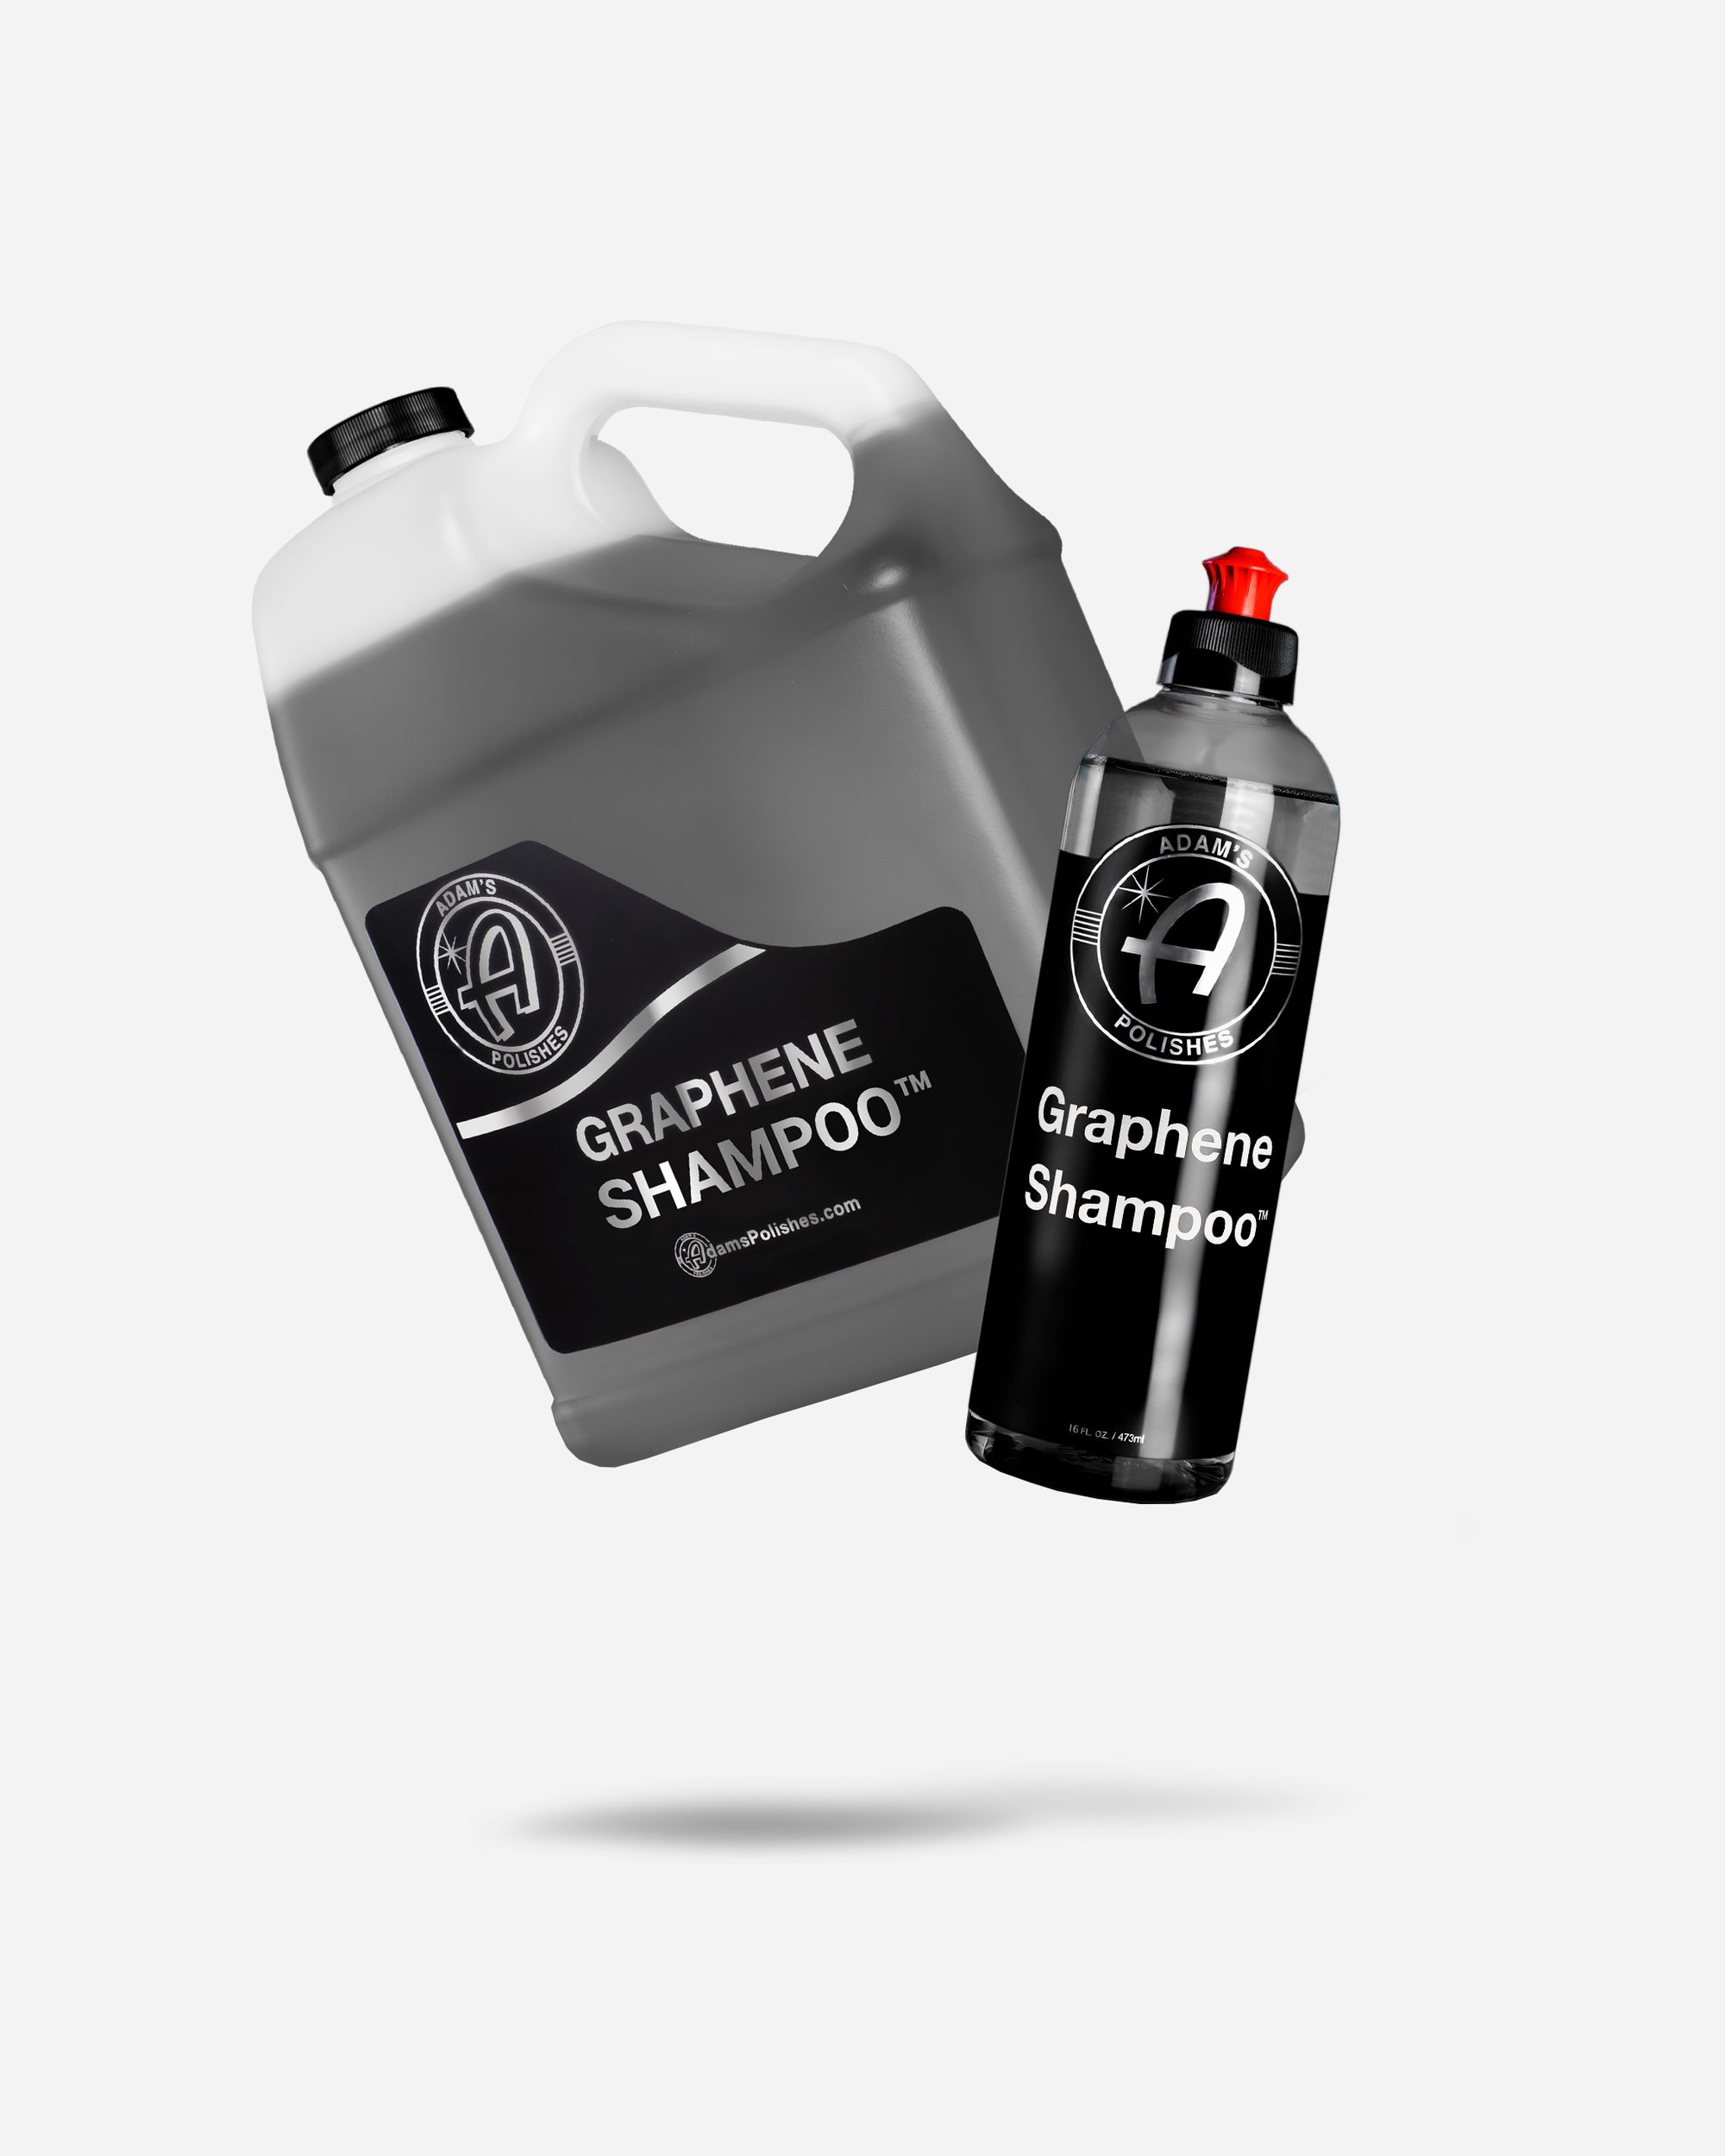 Graphene Shampoo™ Gallon with Free 16oz